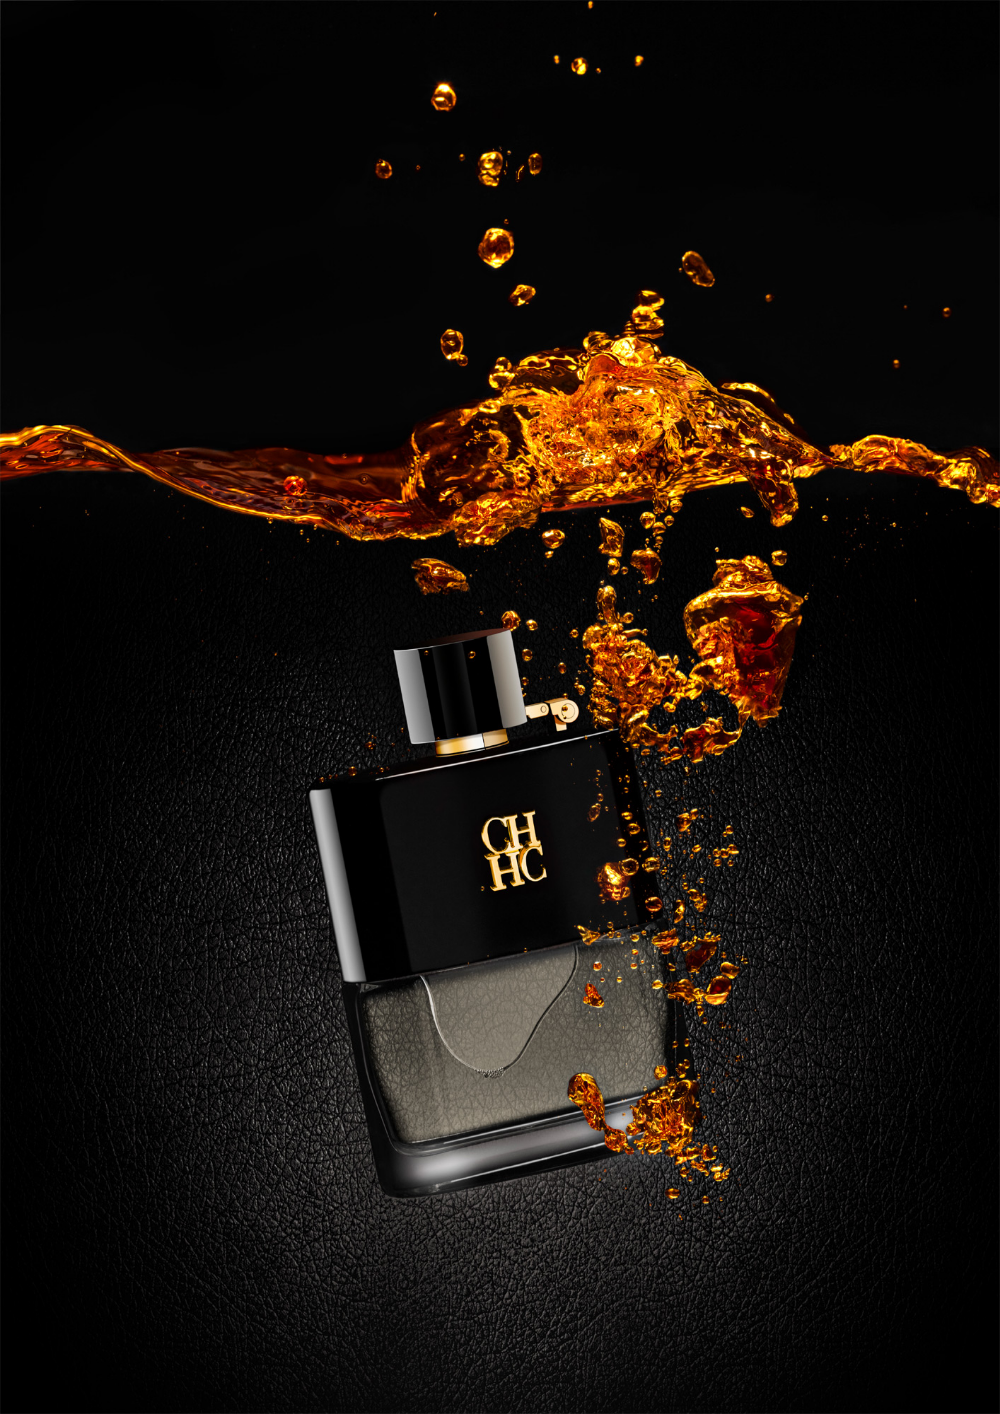 Men's Perfumes Wallpaper High Quality. Download Free. Men